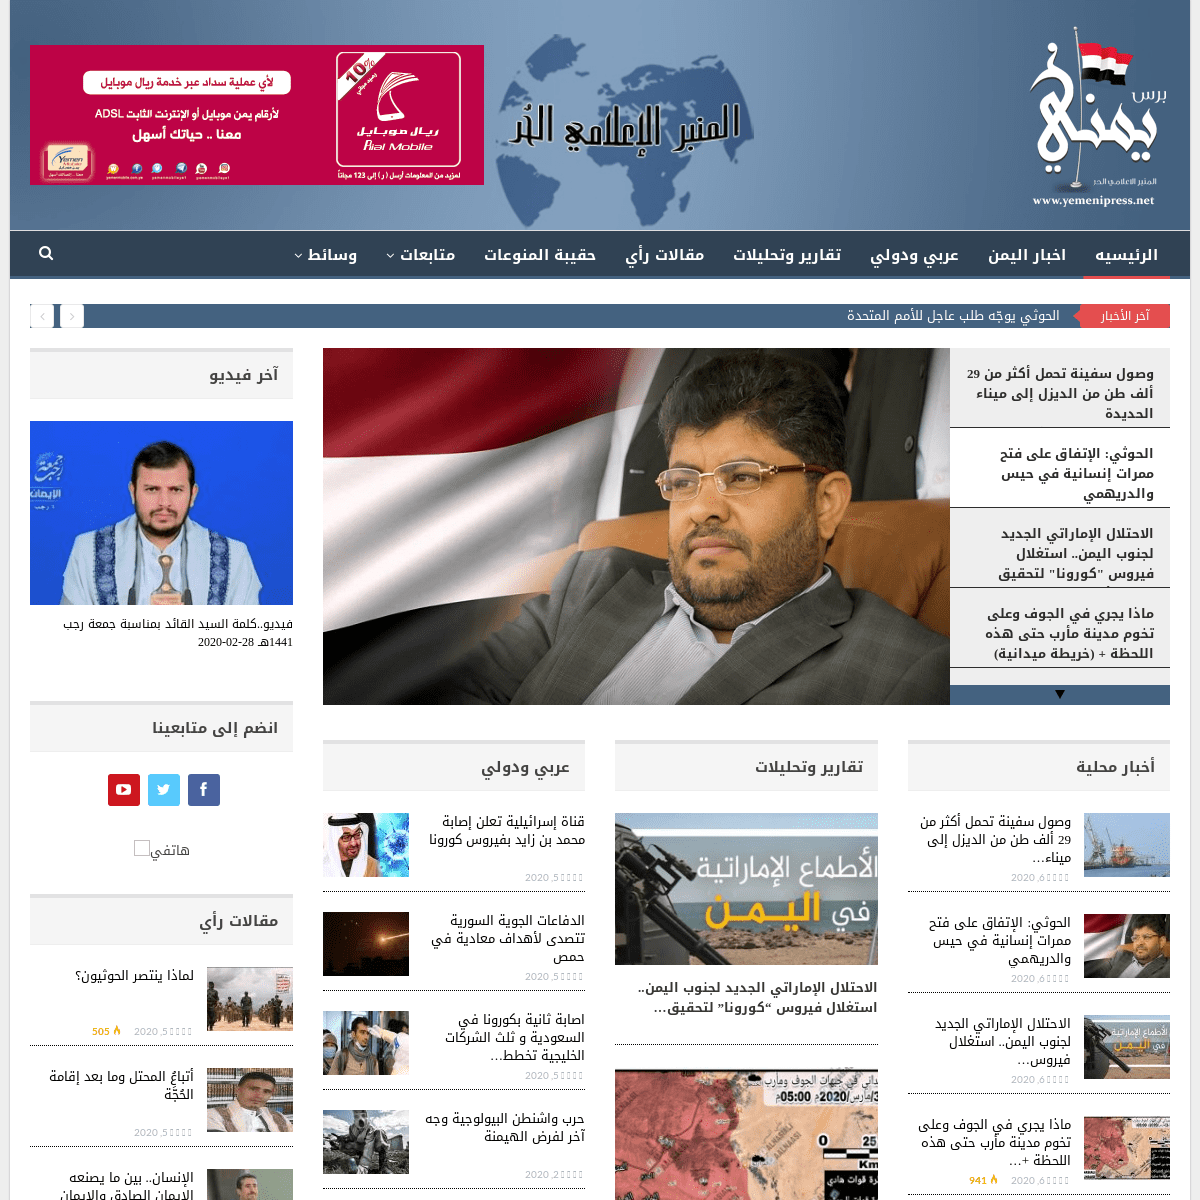 A complete backup of yemenipress.net